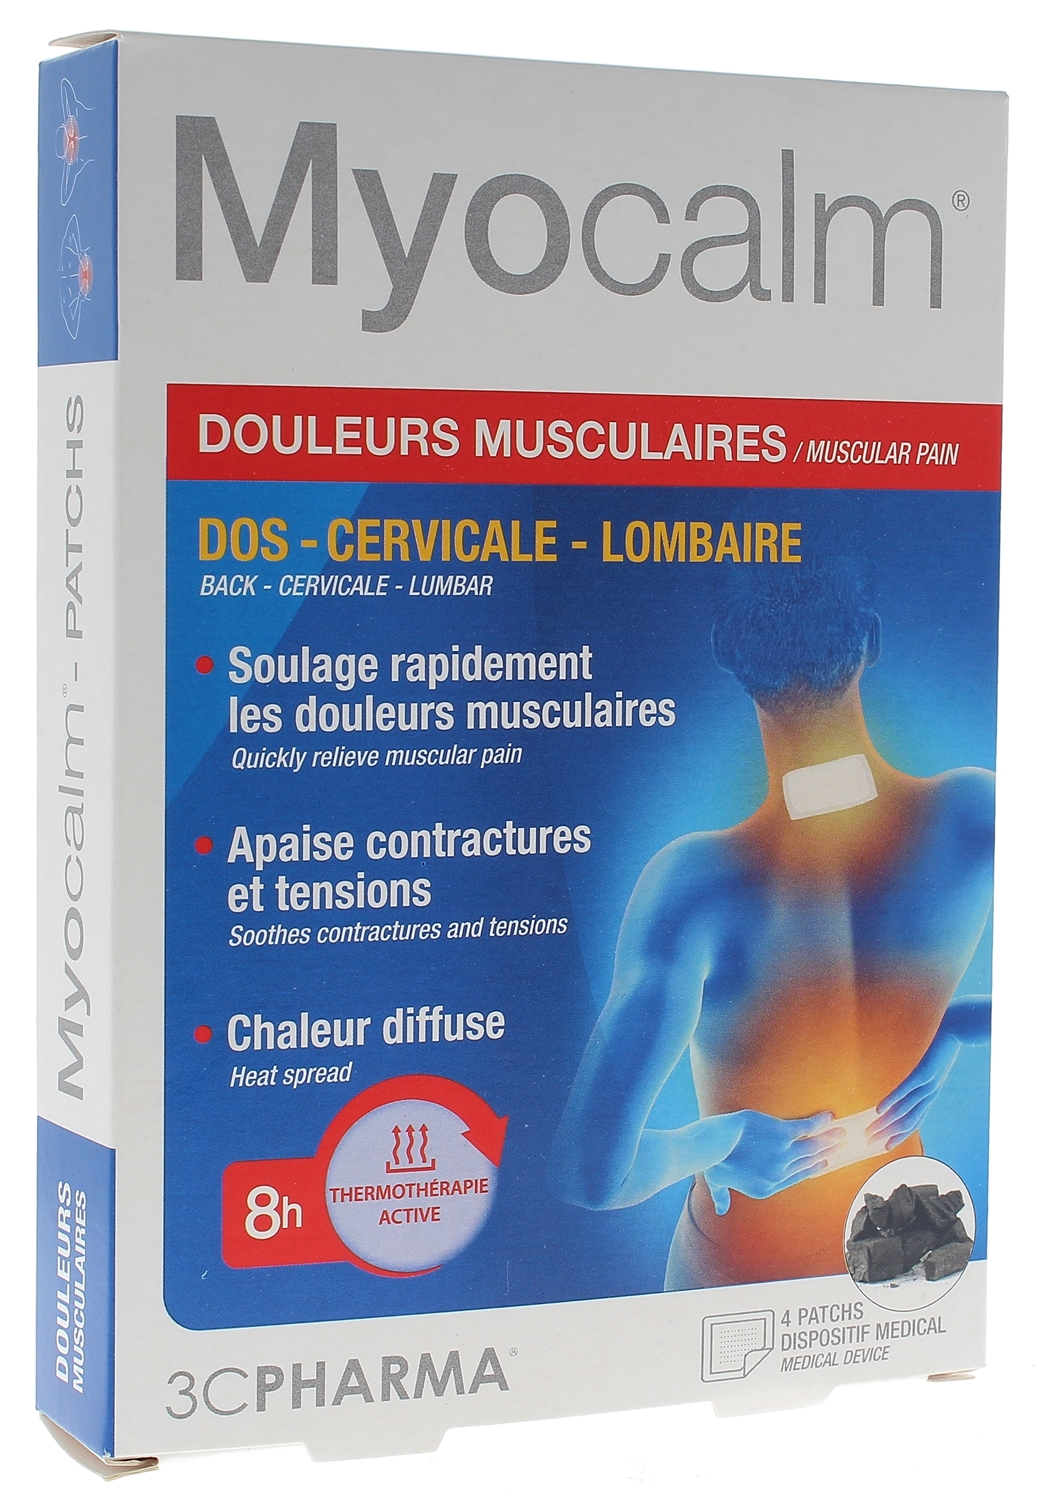 Myocalm Douleurs musculaires 3C Pharma - patch anti-douleurs ...